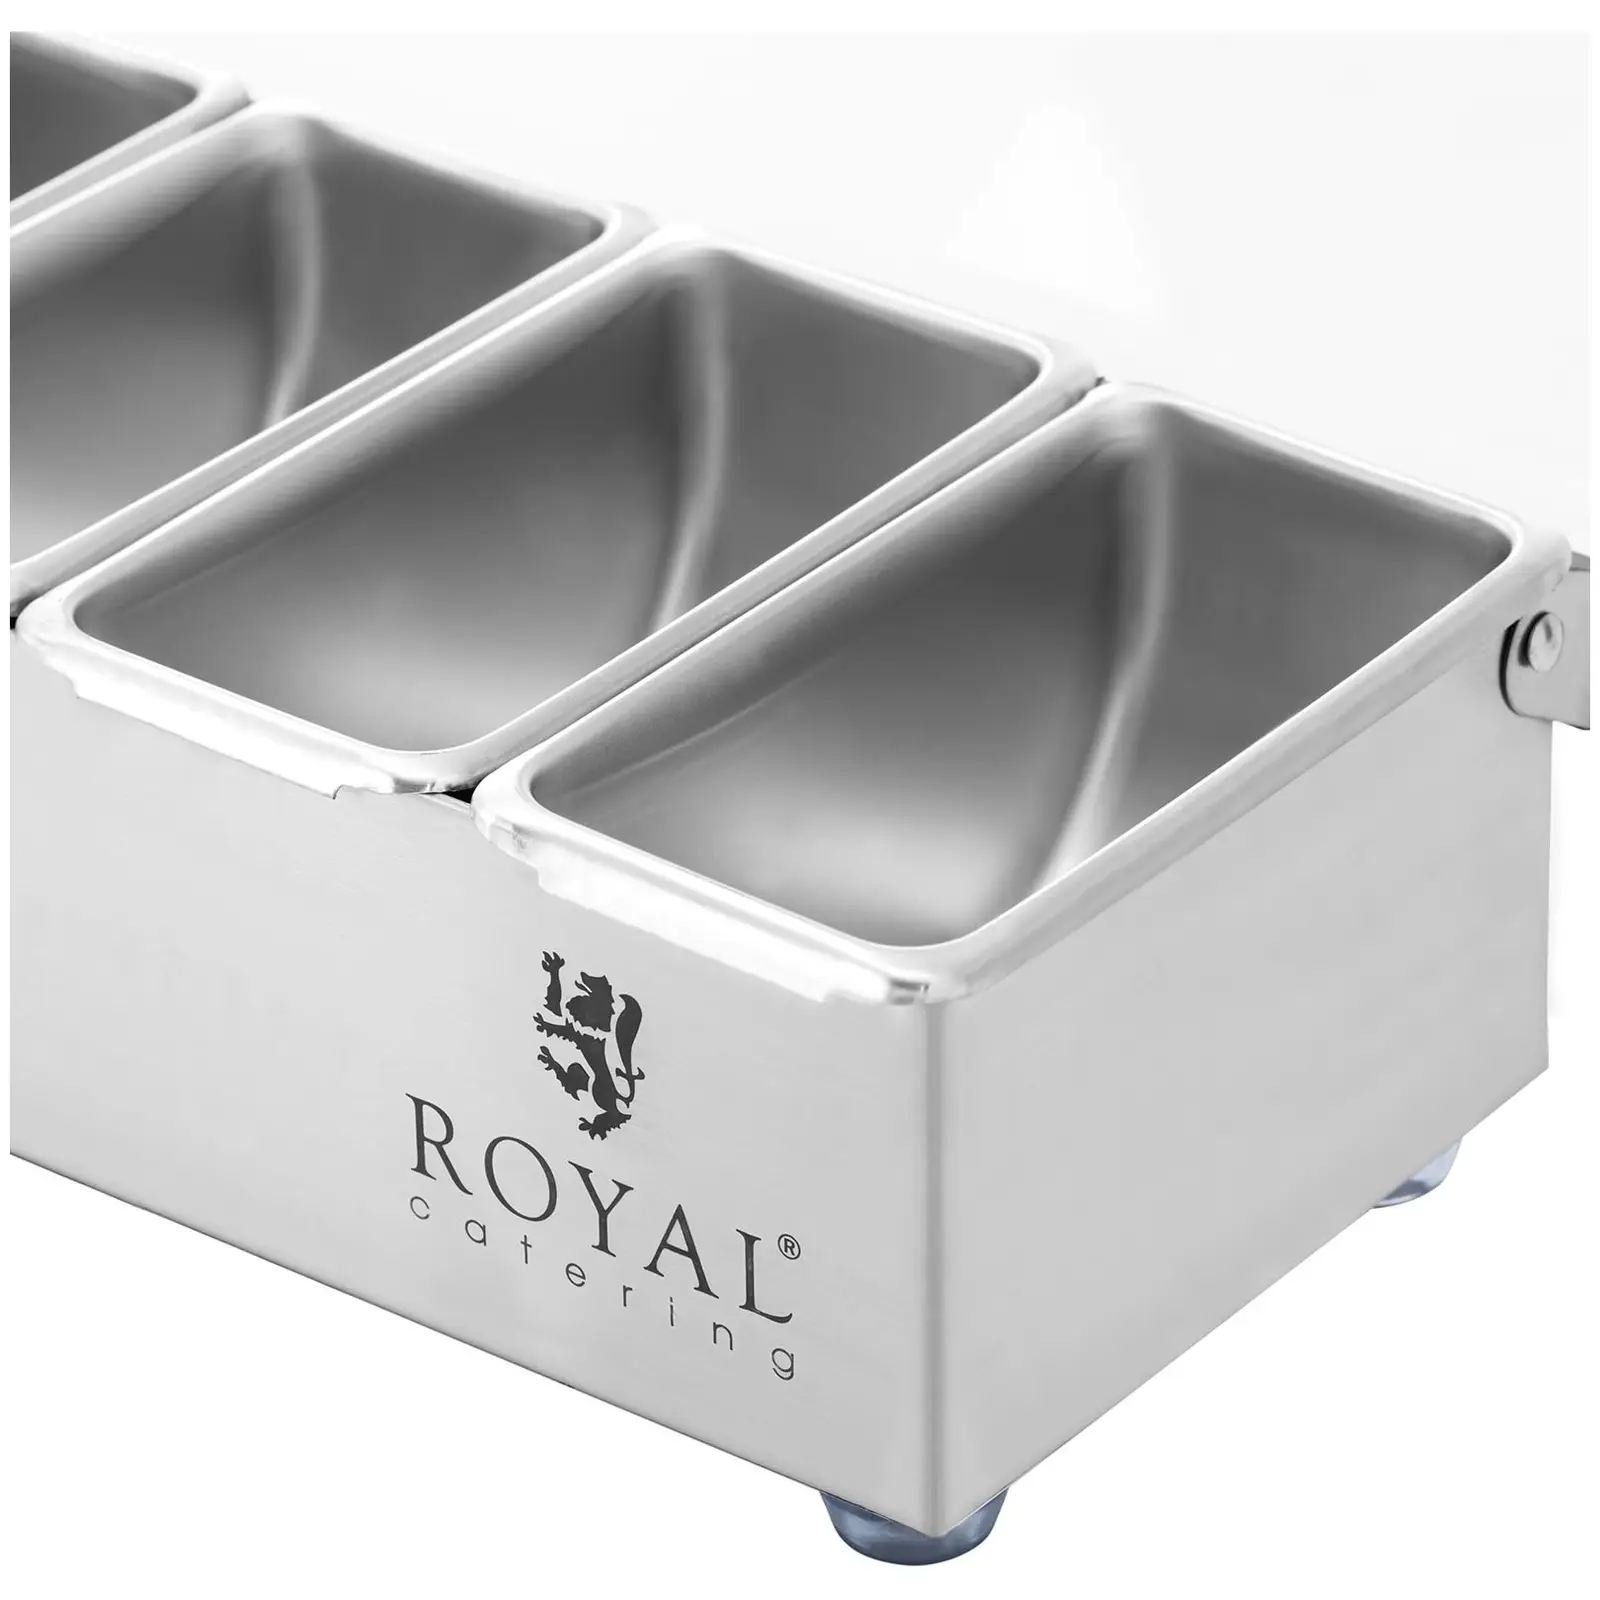 Ingrediensbehållare - Rostfritt stål - 6 x 0,4 L - Royal Catering